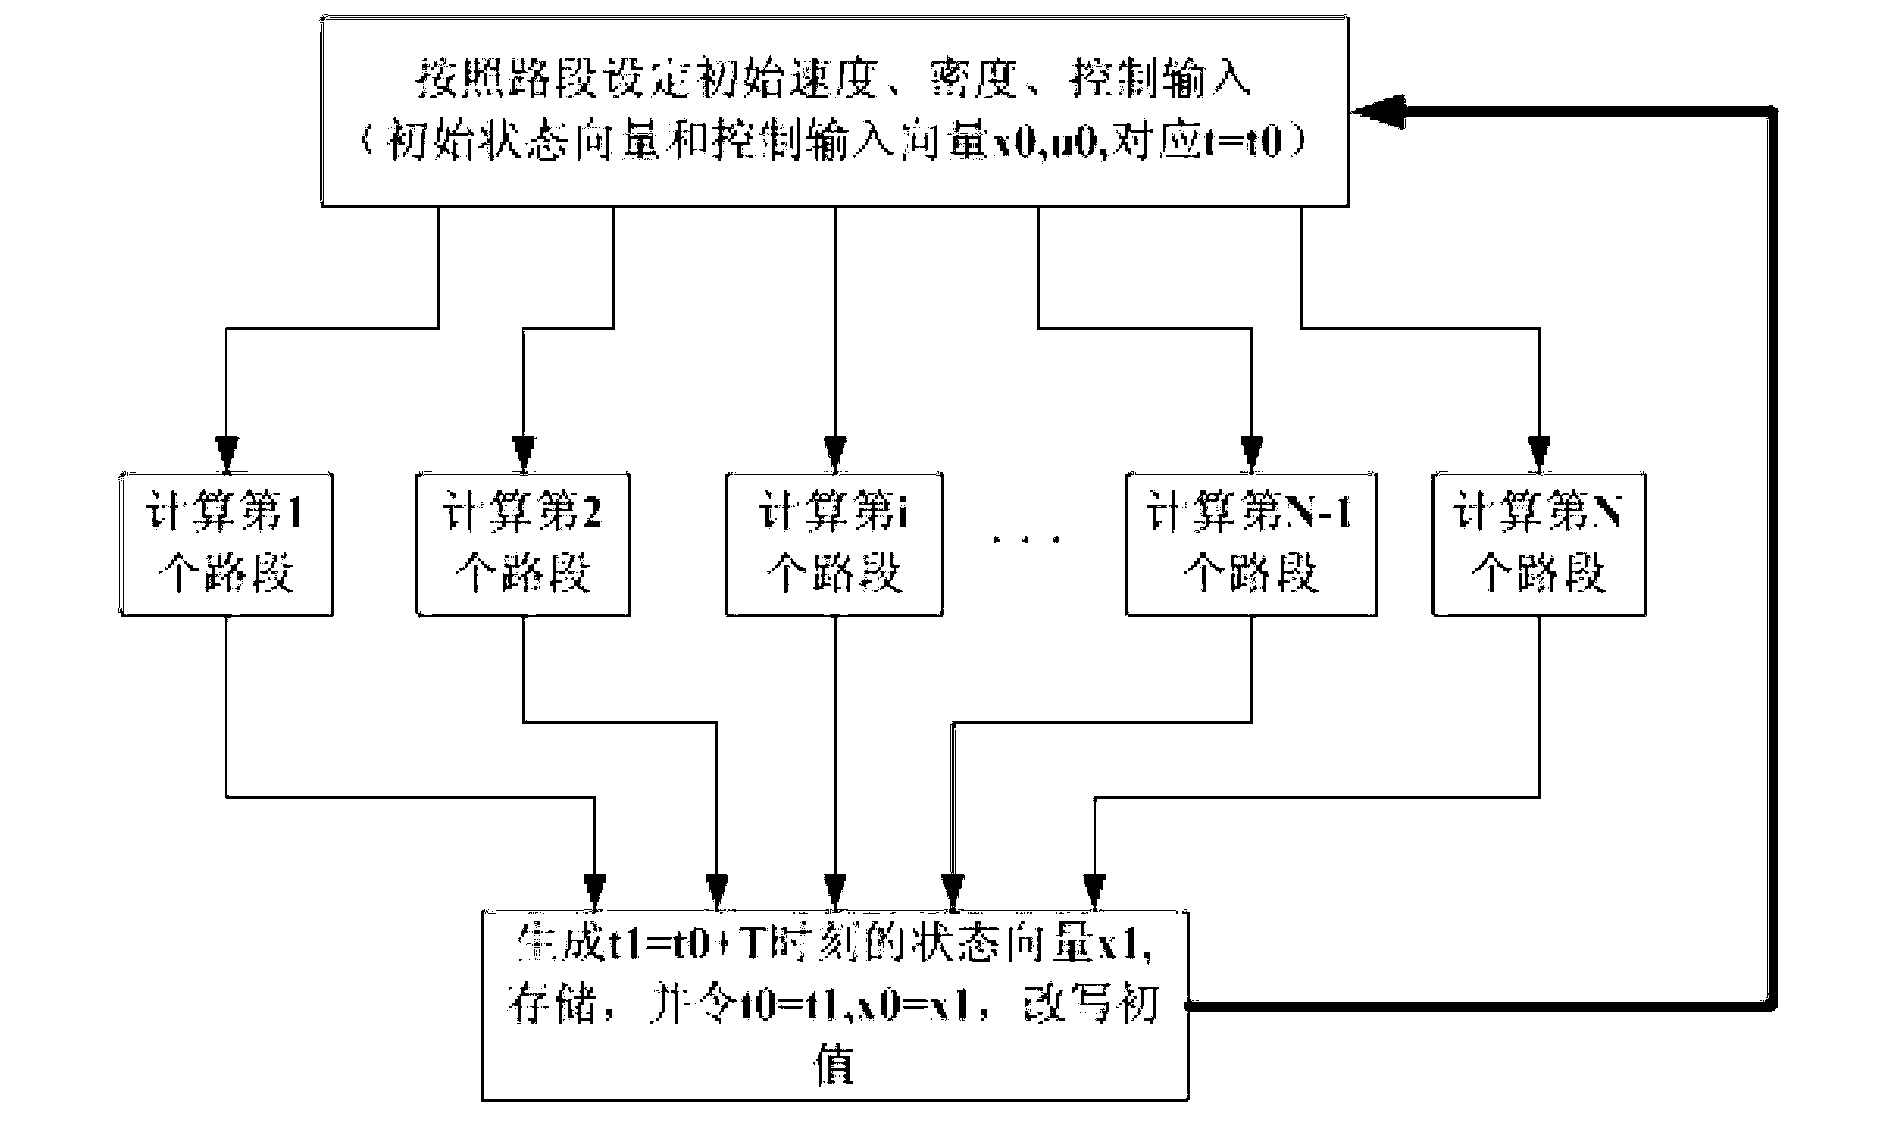 FPGA (Field Programmable Gate Array) online prediction control method based on Jiang-Wu-Zhu macroscopic traffic flow model